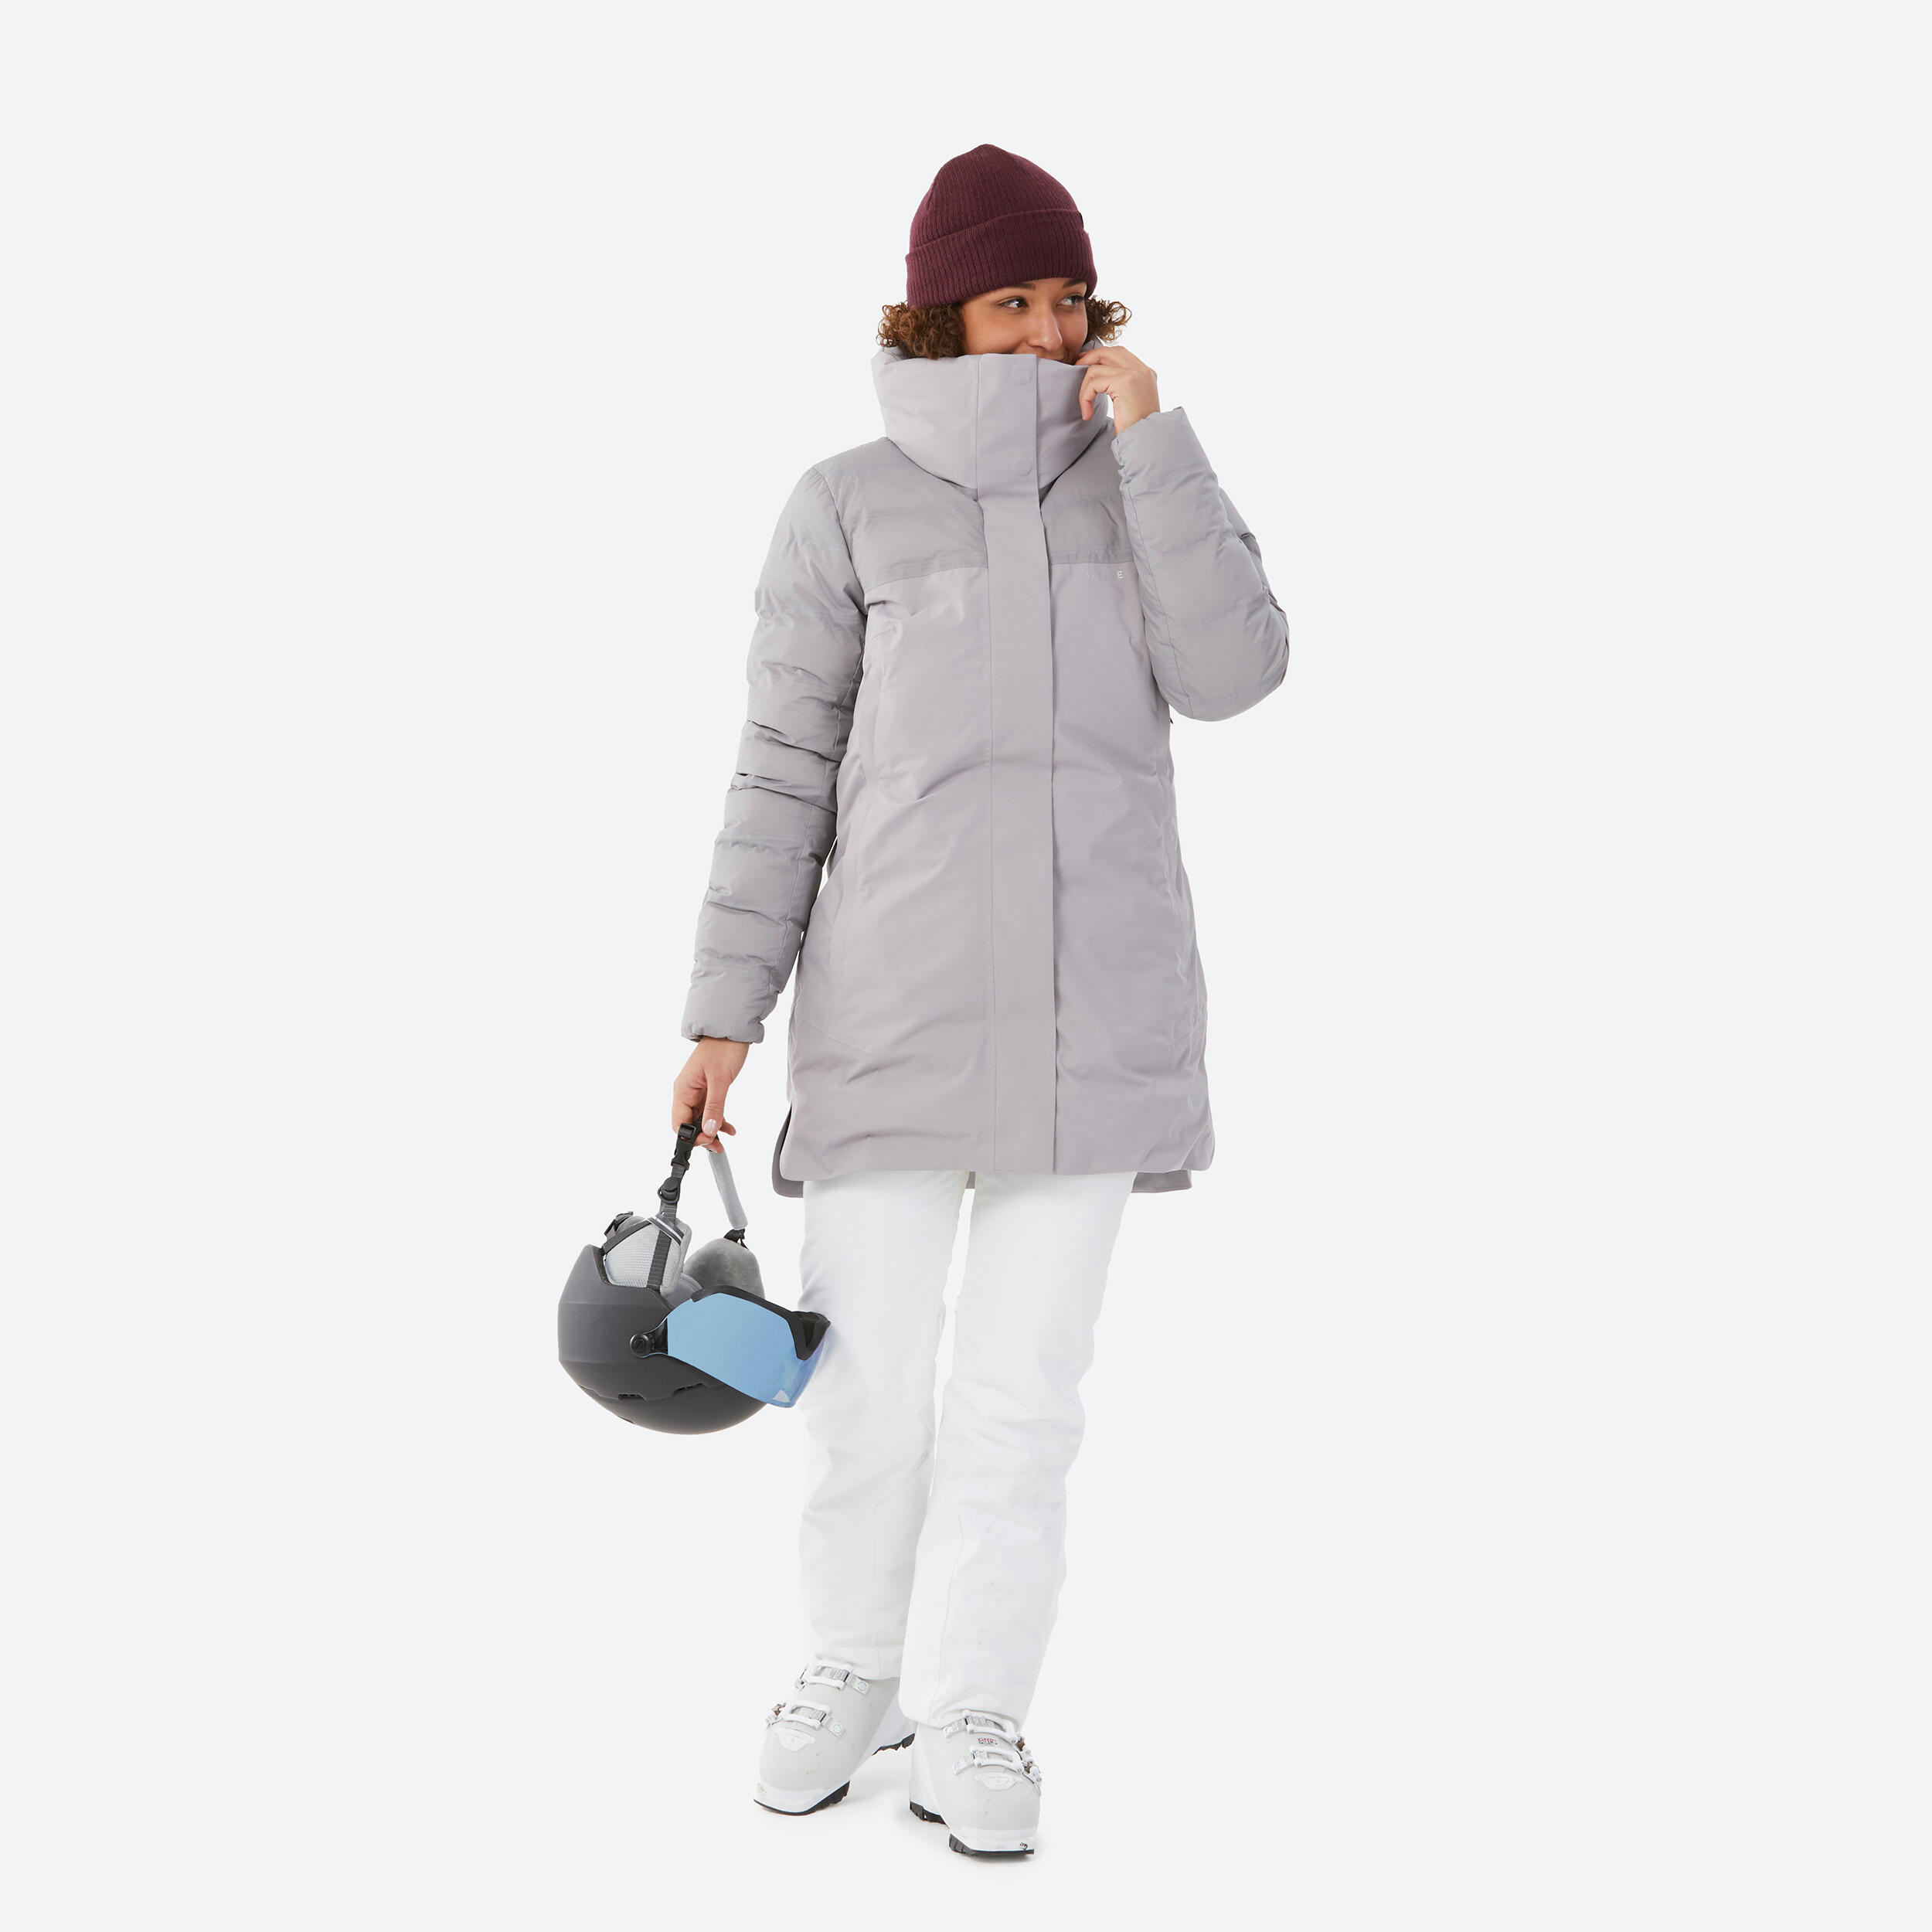 Women's long warm ski jacket 500 - light grey 6/7